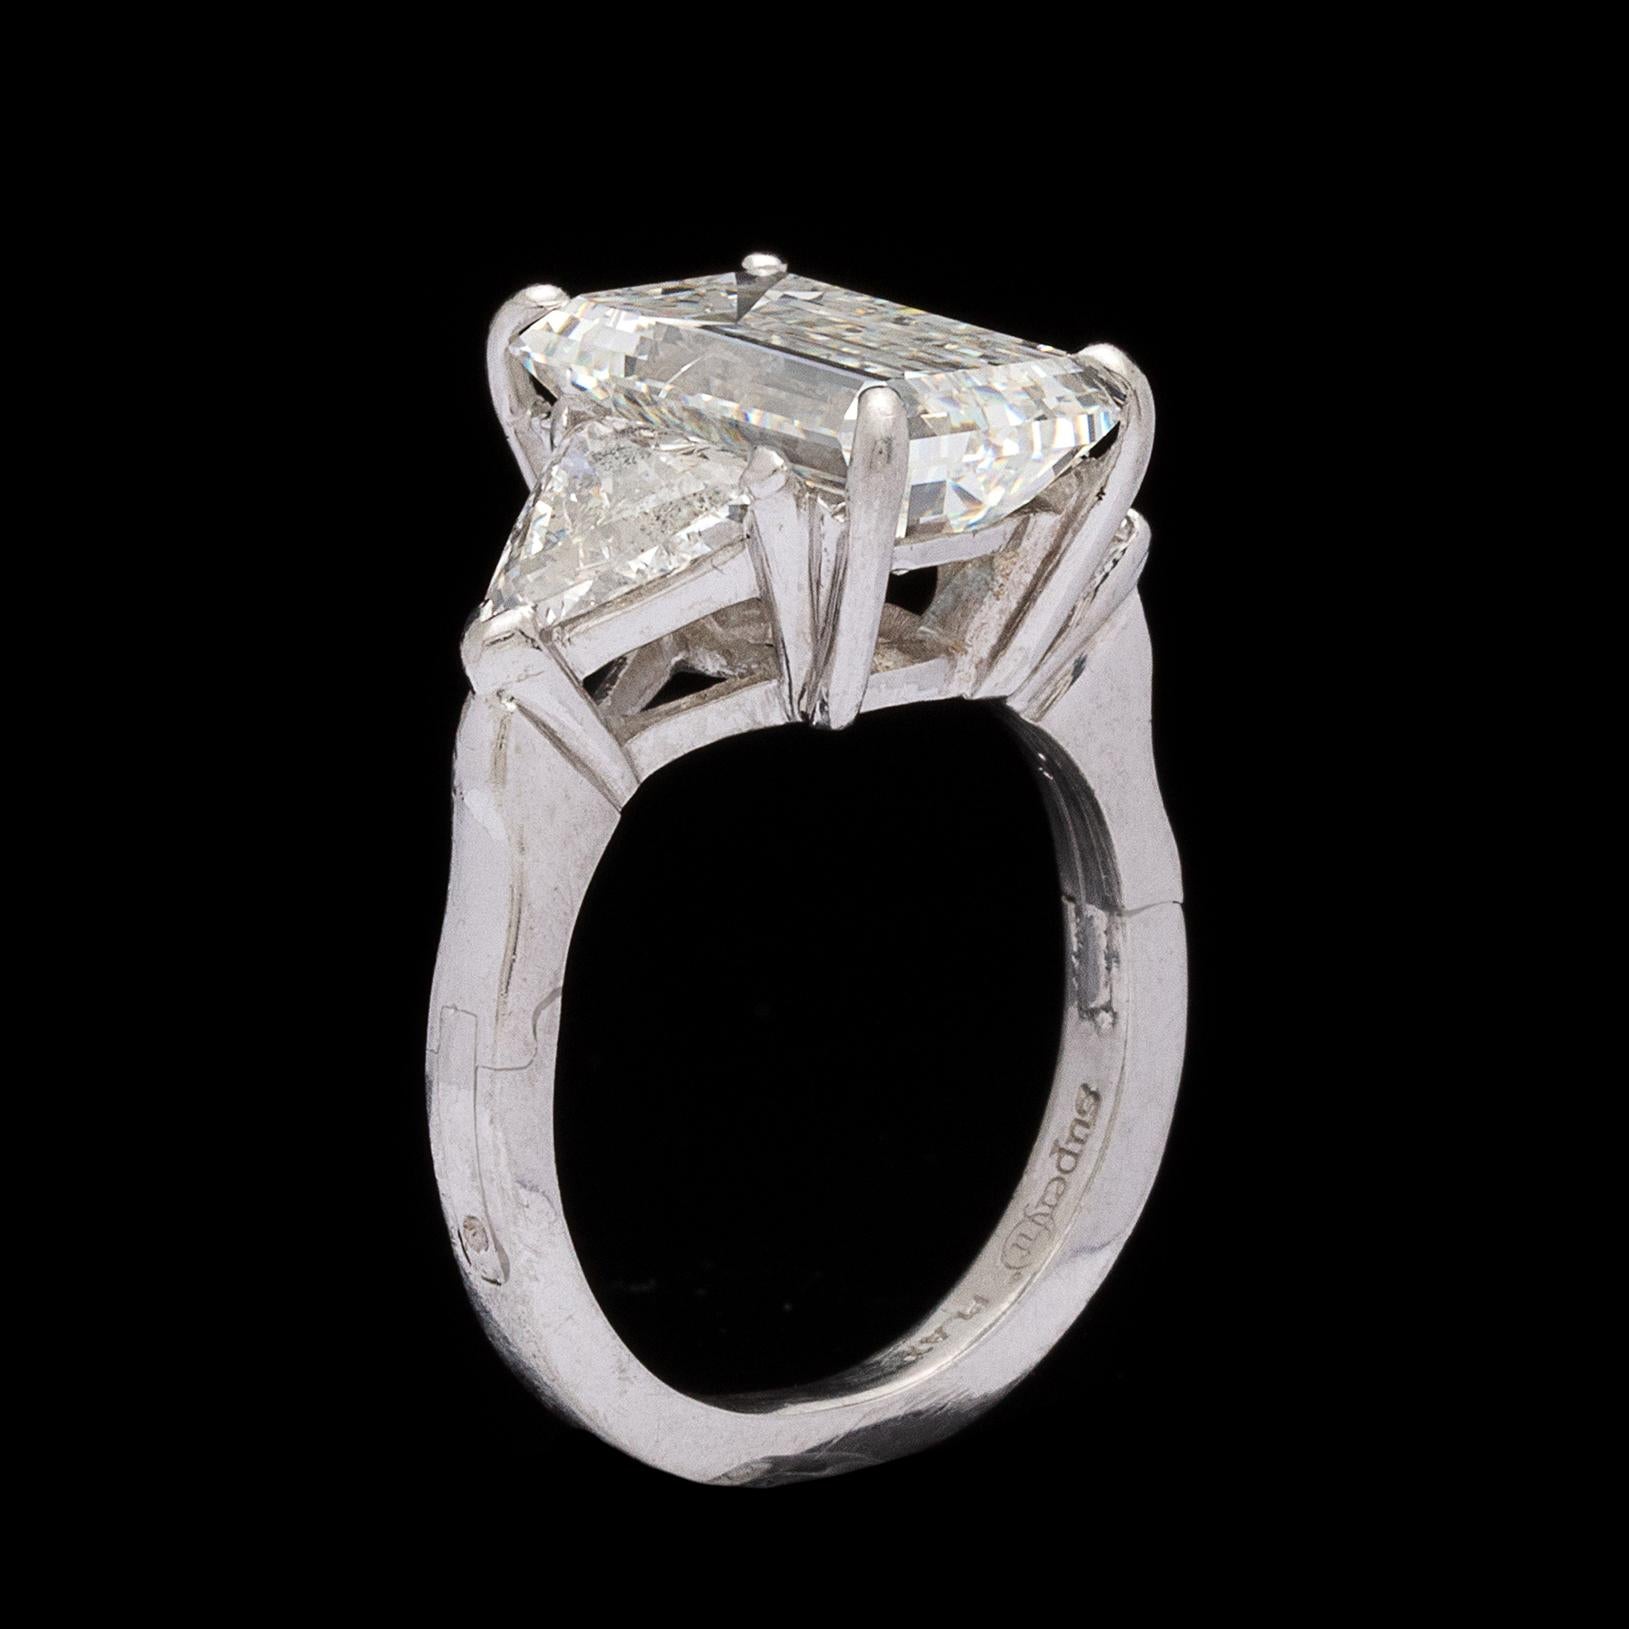 Women's or Men's Stunning GIA 6.23 Carat G/SI2 Emerald Cut Diamond Ring